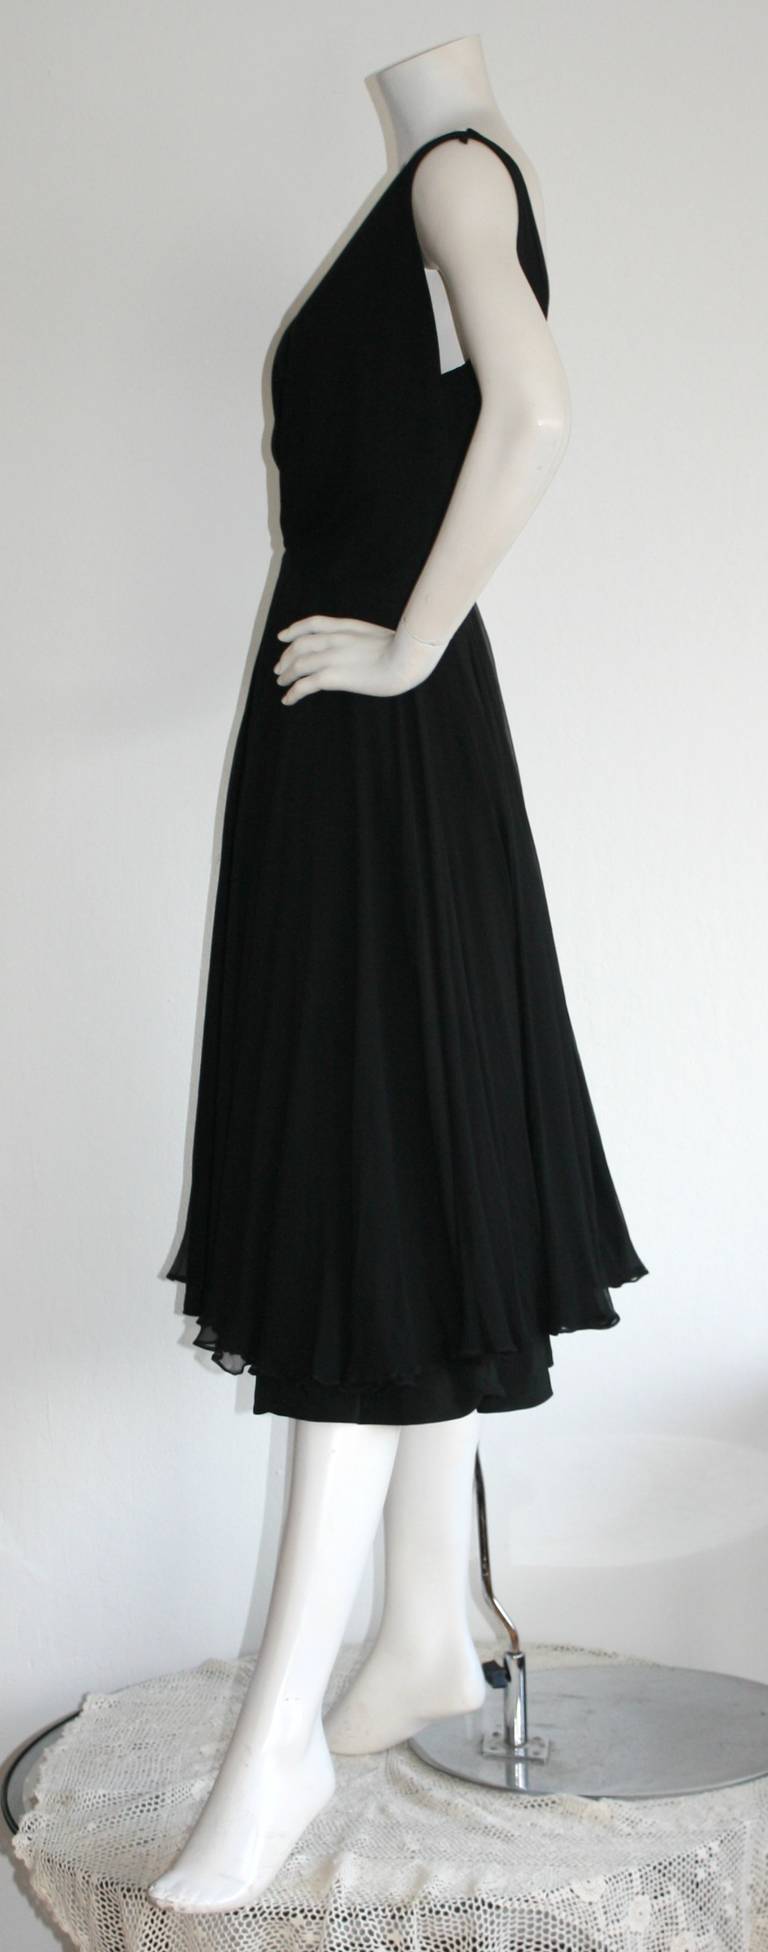 Spectacular I. Magnin 1950s Black Chiffon Dress Perfect Little Black Dress 3